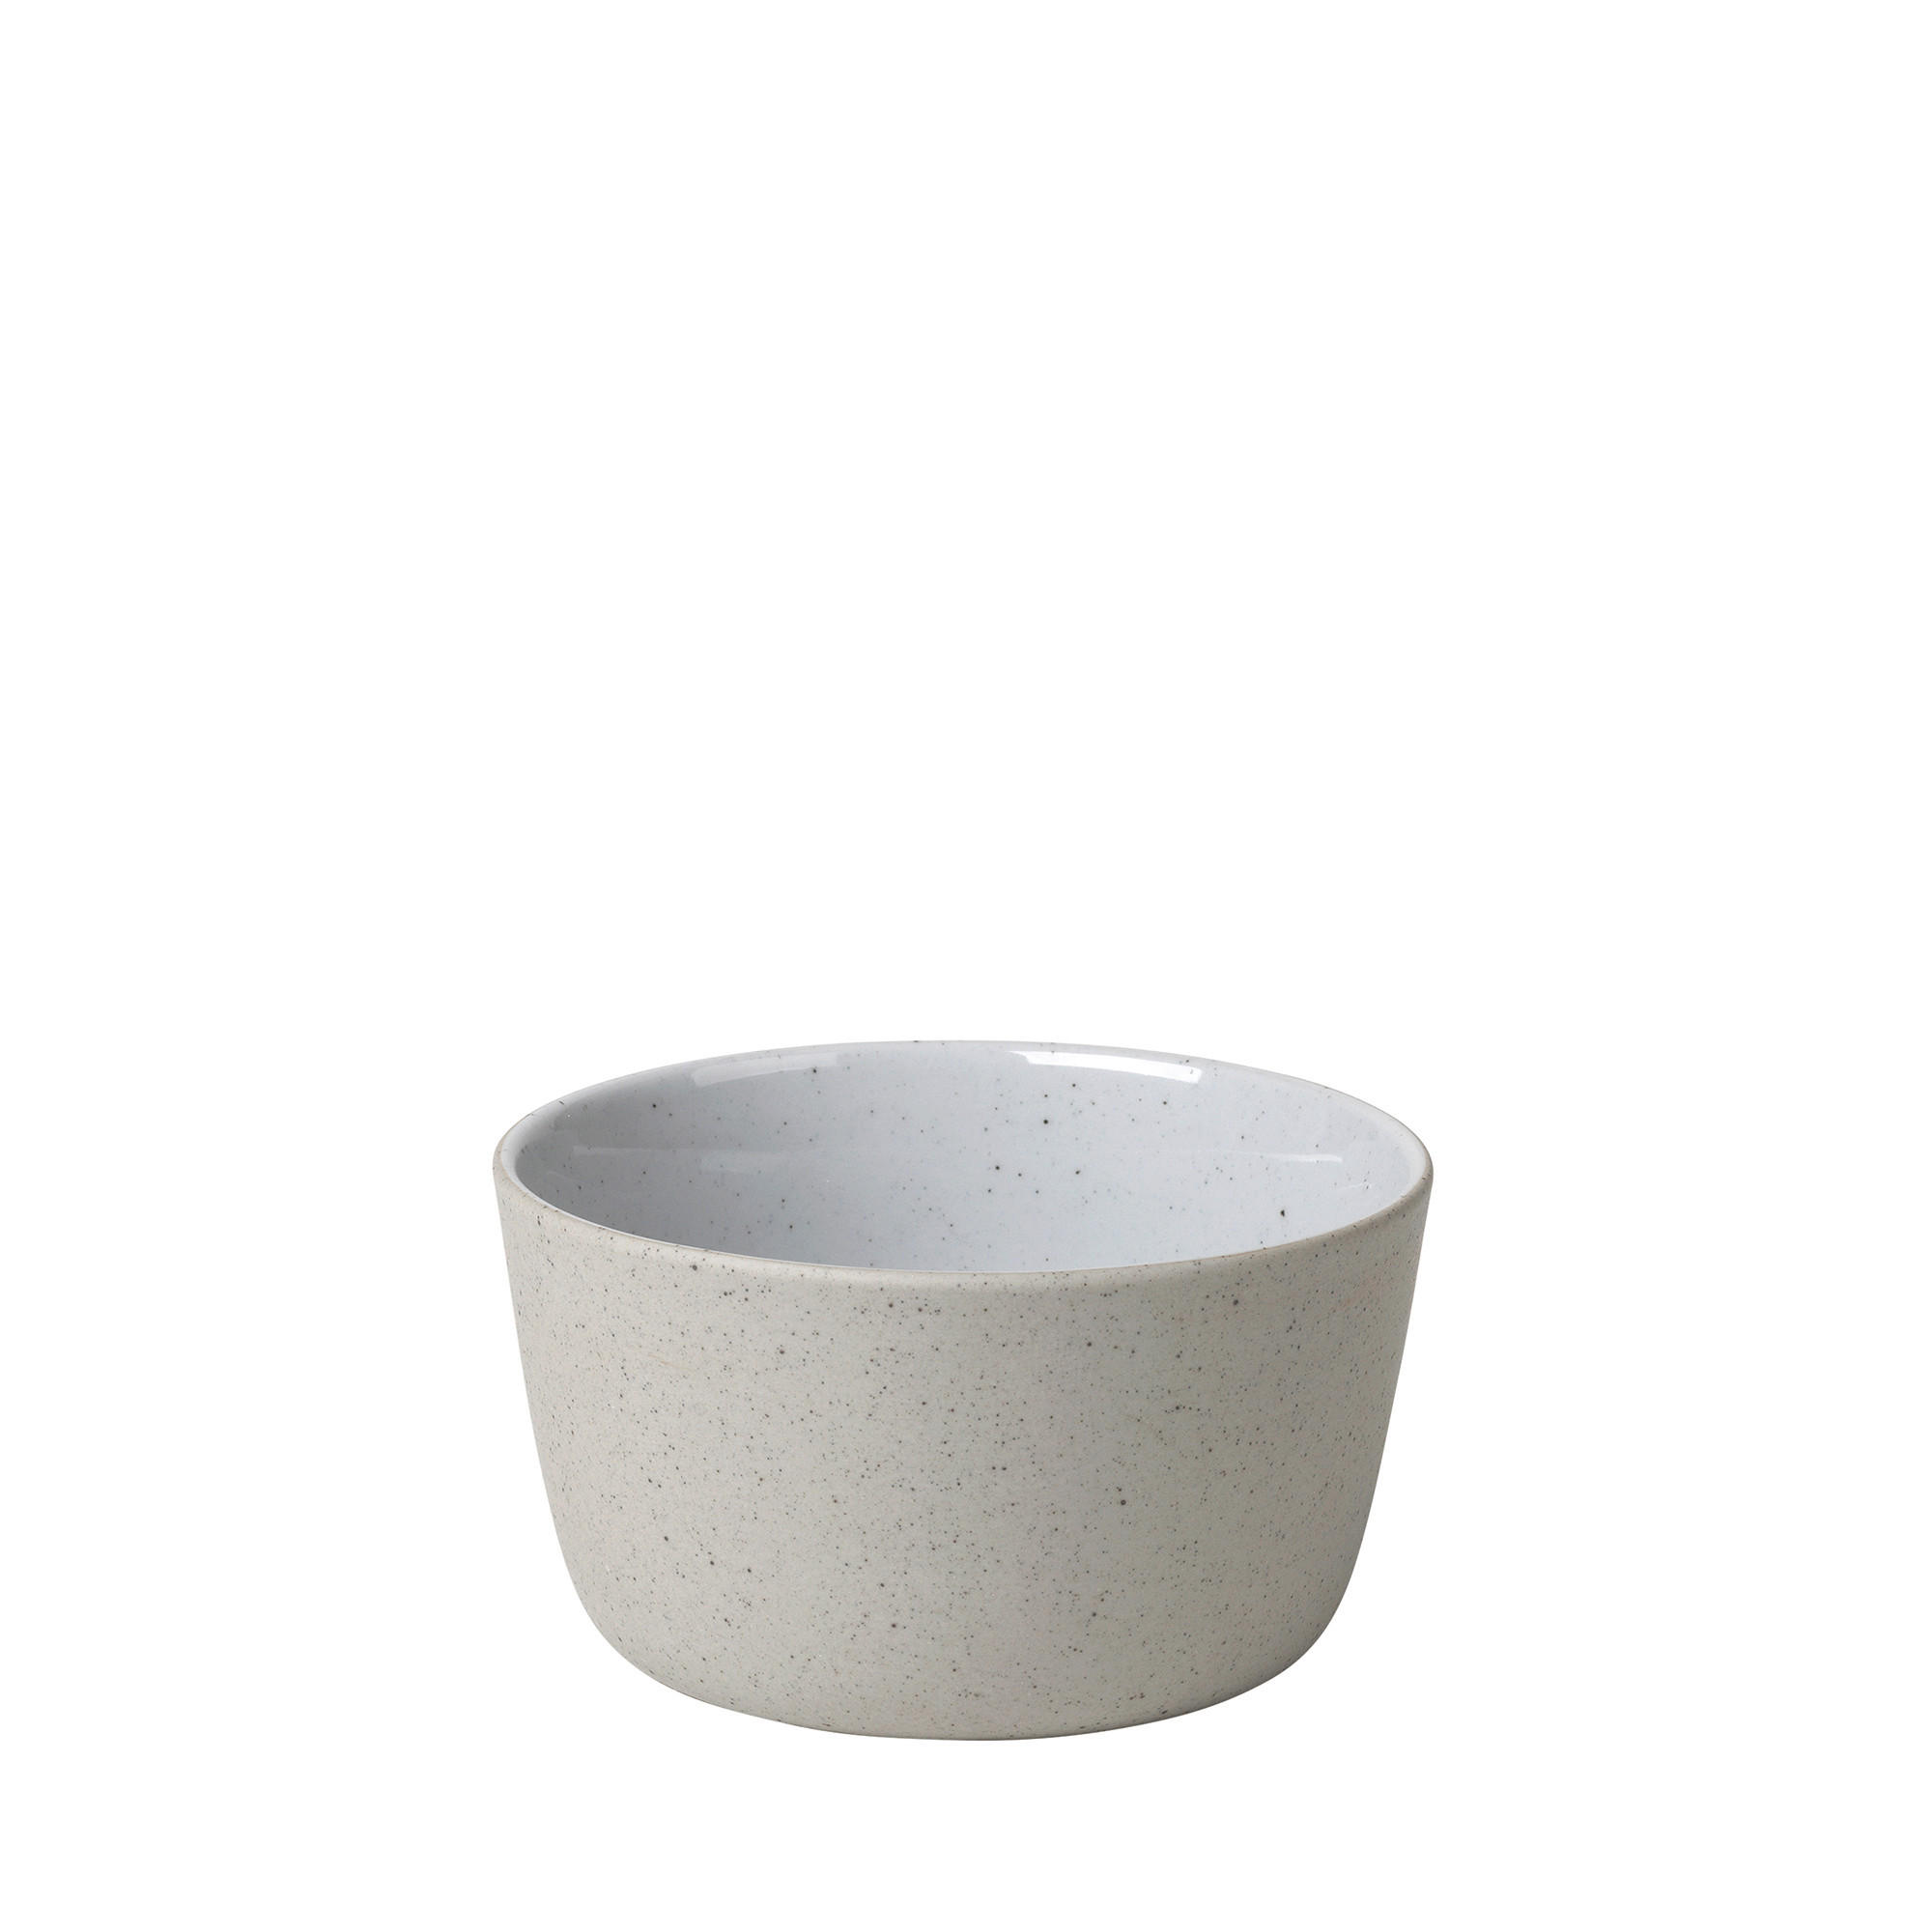 SNACKSCHALE Keramik  - Beige/Grau, Design, Keramik (11/6,2cm) - Blomus